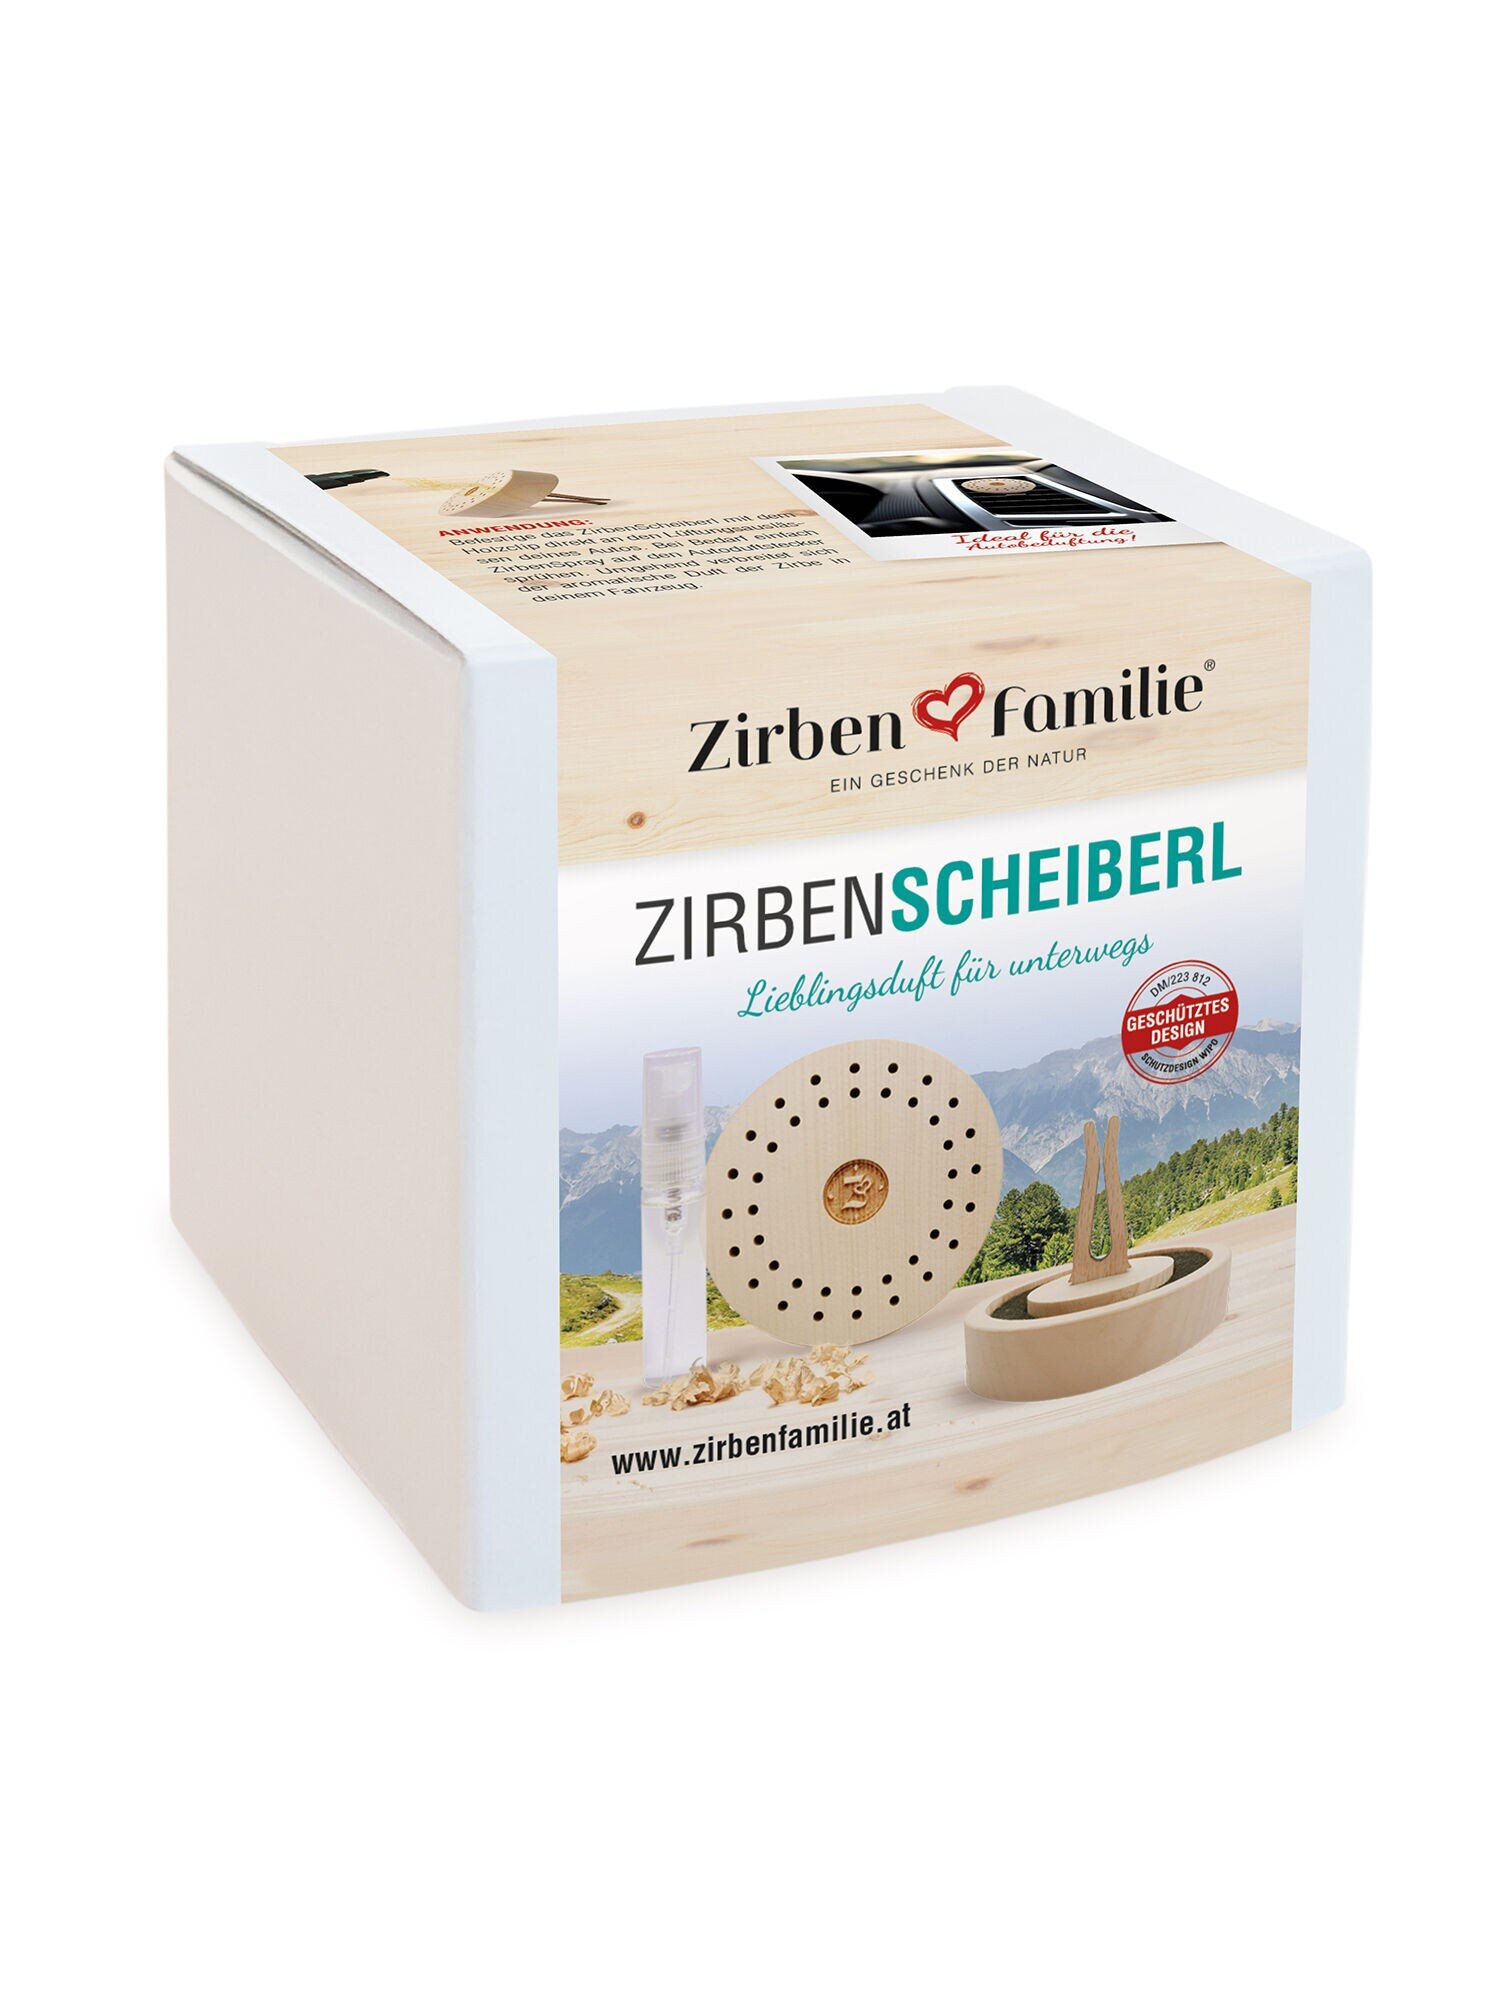 ZirbenScheiberl Autoduft - Zirbenfamilie - Marken